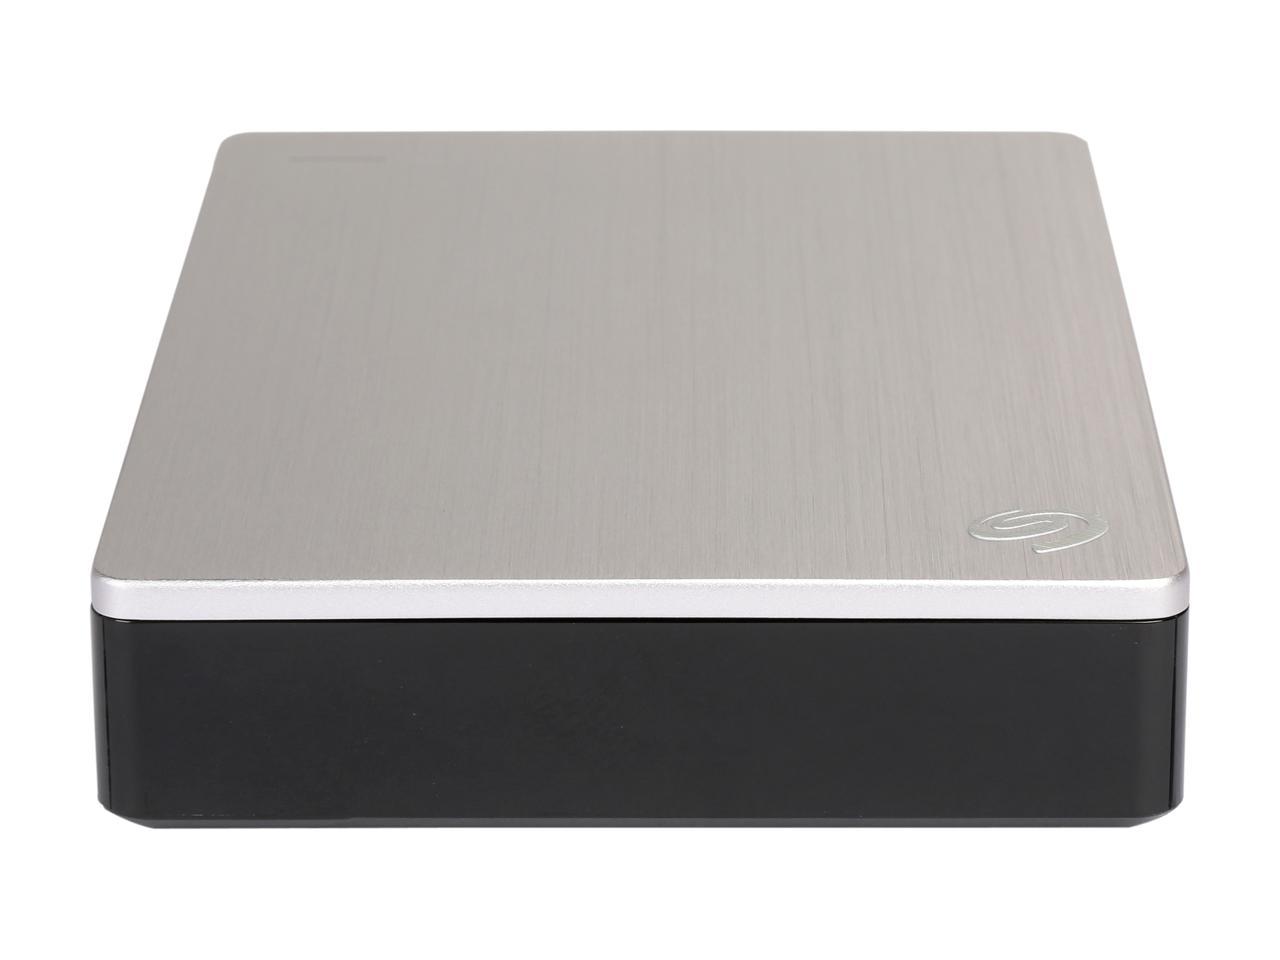 Seagate Backup Plus 5TB USB 3.0 Portable External Hard Drive - STDR5000101 (Silver)